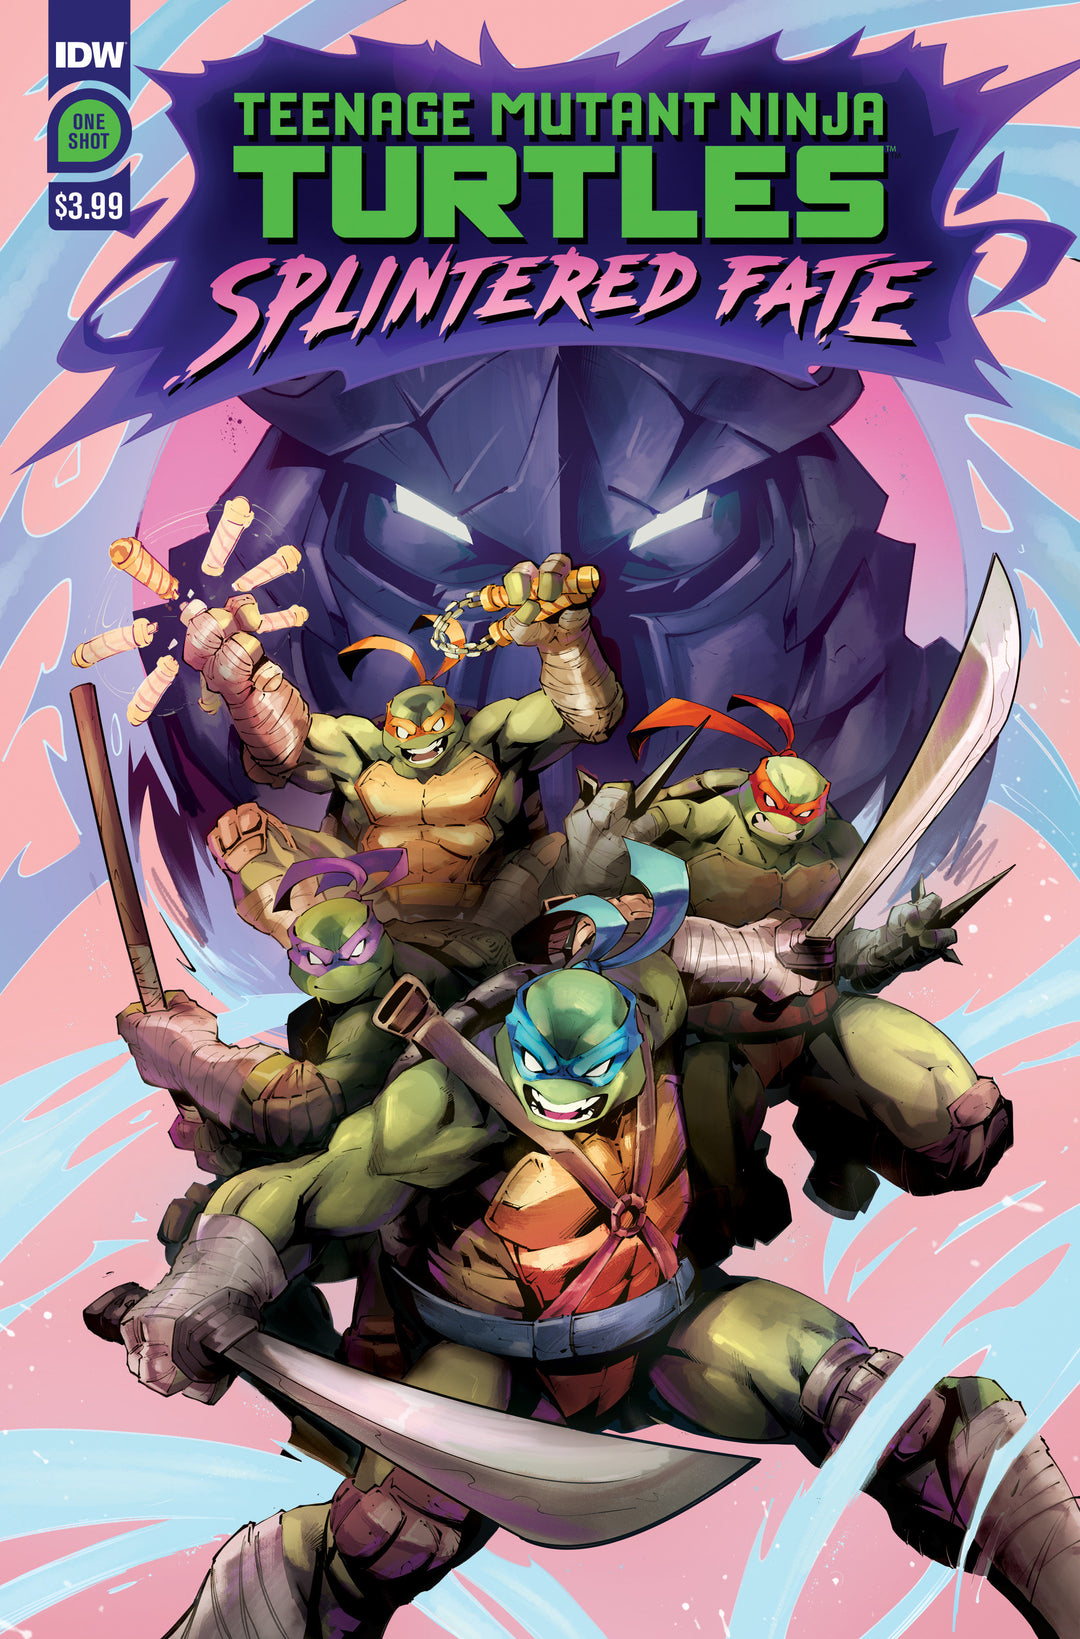 Teenage Mutant Ninja Turtles: Splintered Fate #1 Cover A (Verdugo)